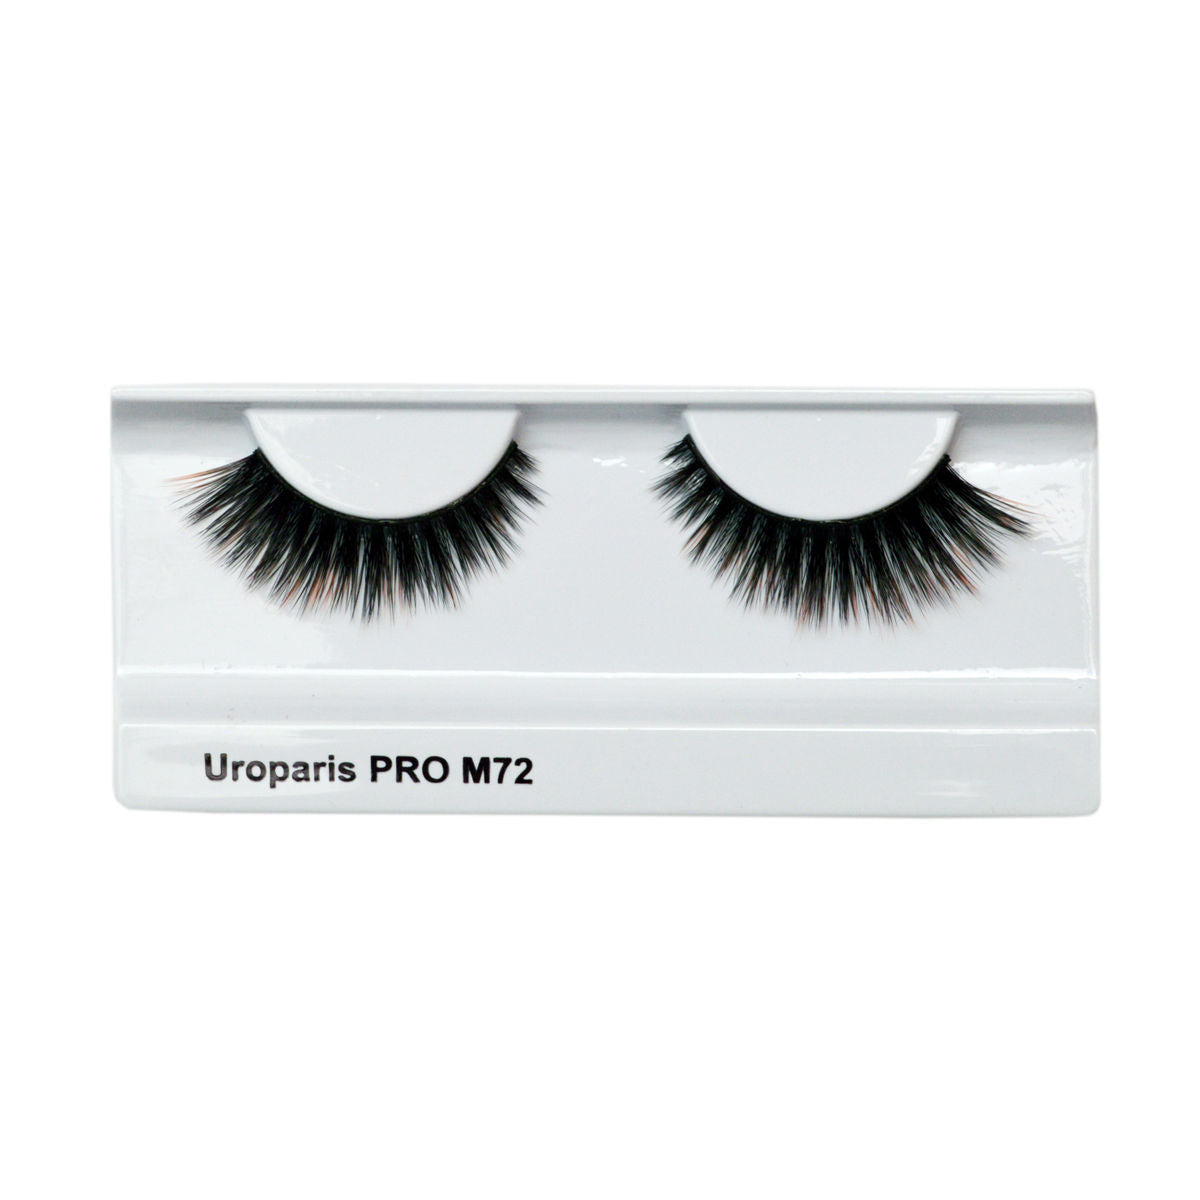 Uroparis Faux Mink Eyelashes Pro M72 (1 pair) Uroparis